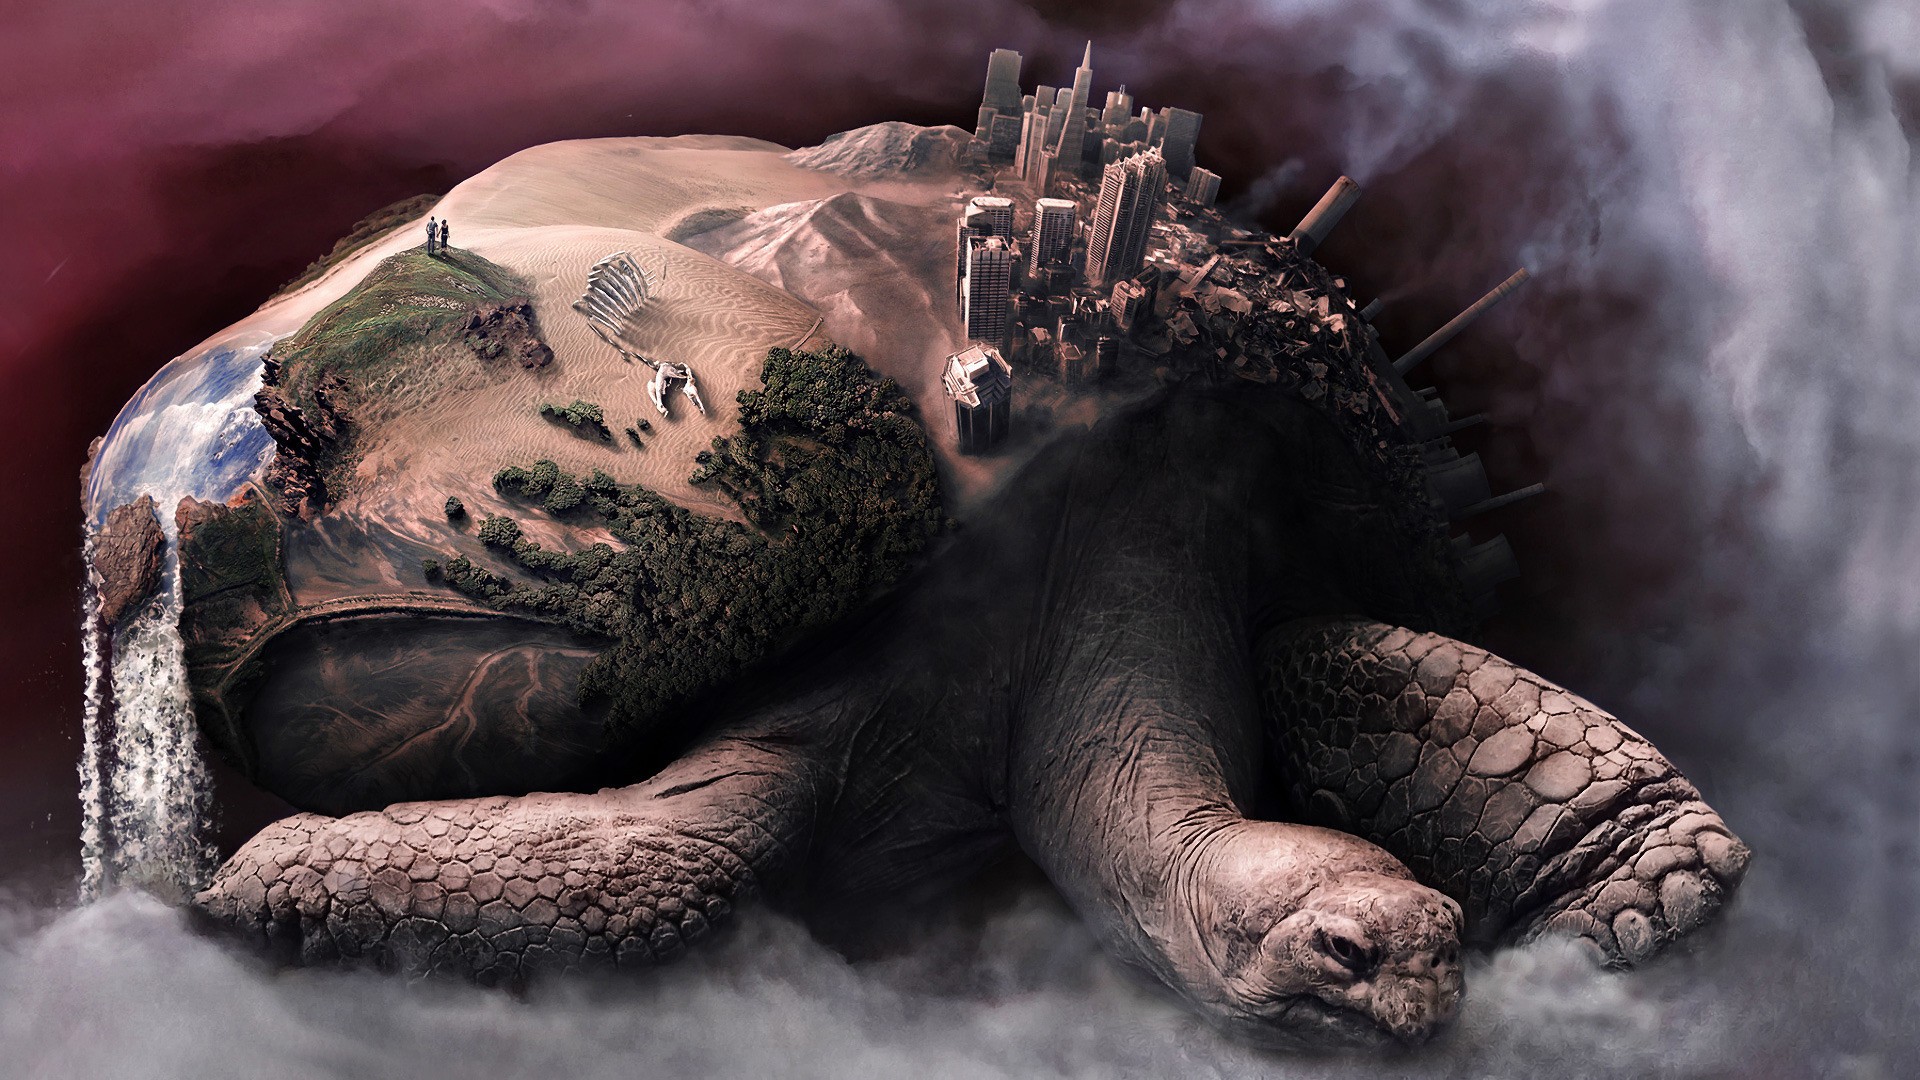 Digital Art Fantasy Art Tortoises Animals Turtle Giant Nature Waterfall Desert Sand Couple Rock Moun 1920x1080